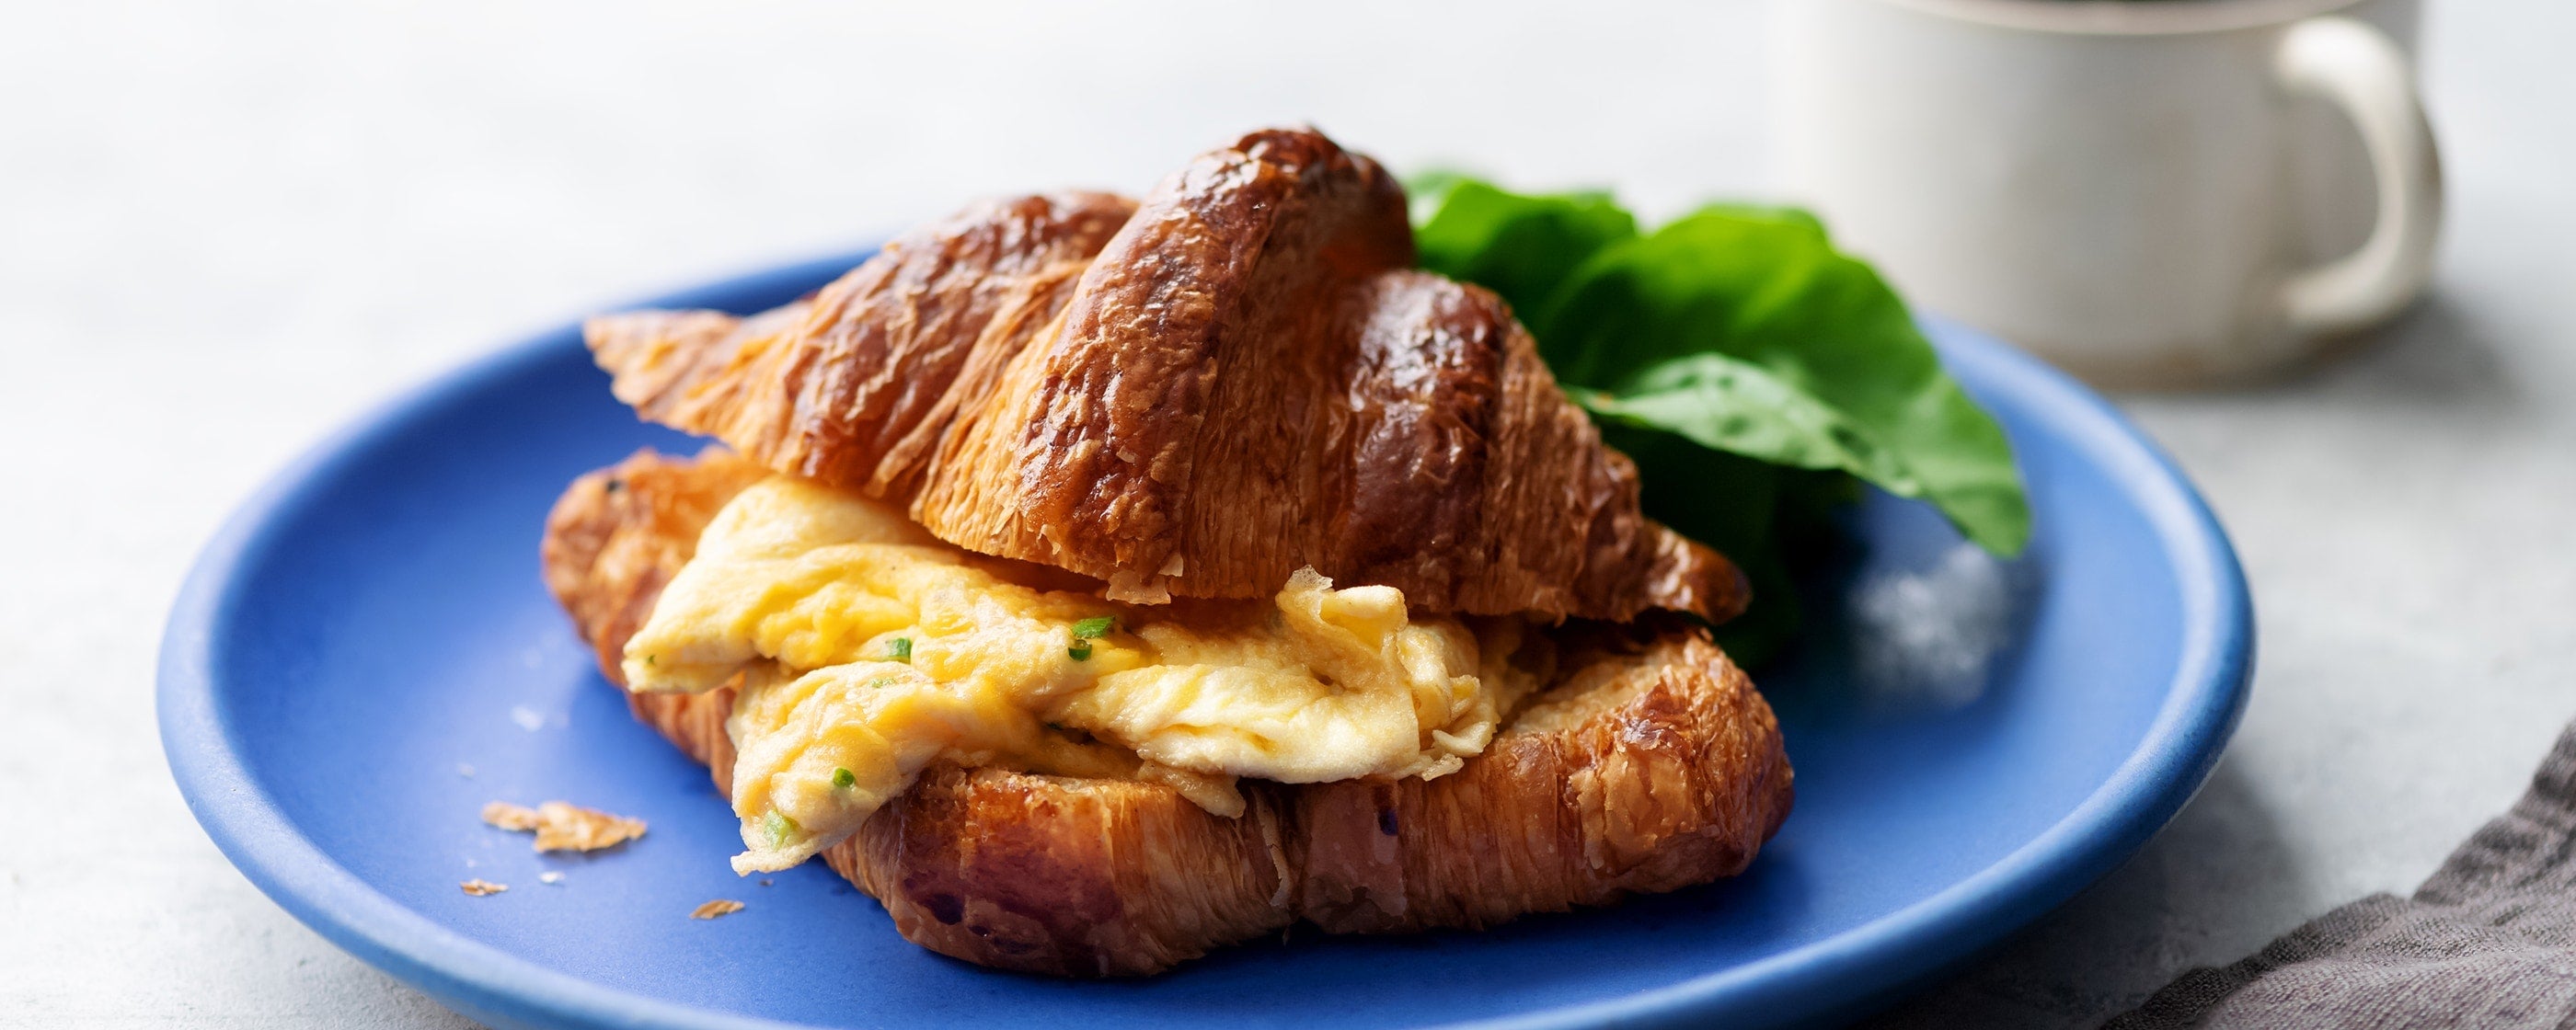 Croissant Sandwich with Egg